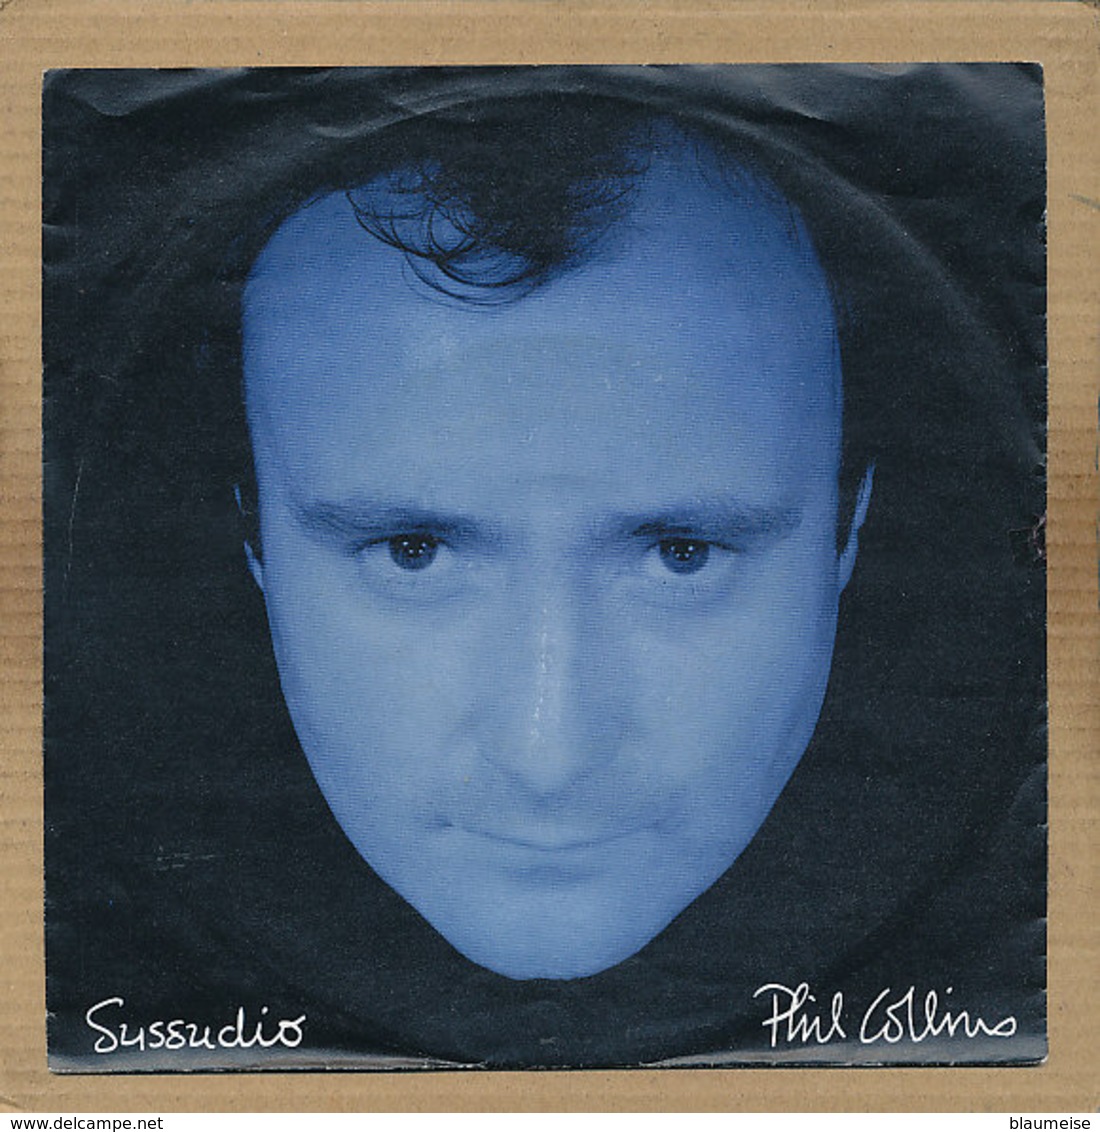 7" Single, Phil Collins - Sussudio - Disco, Pop